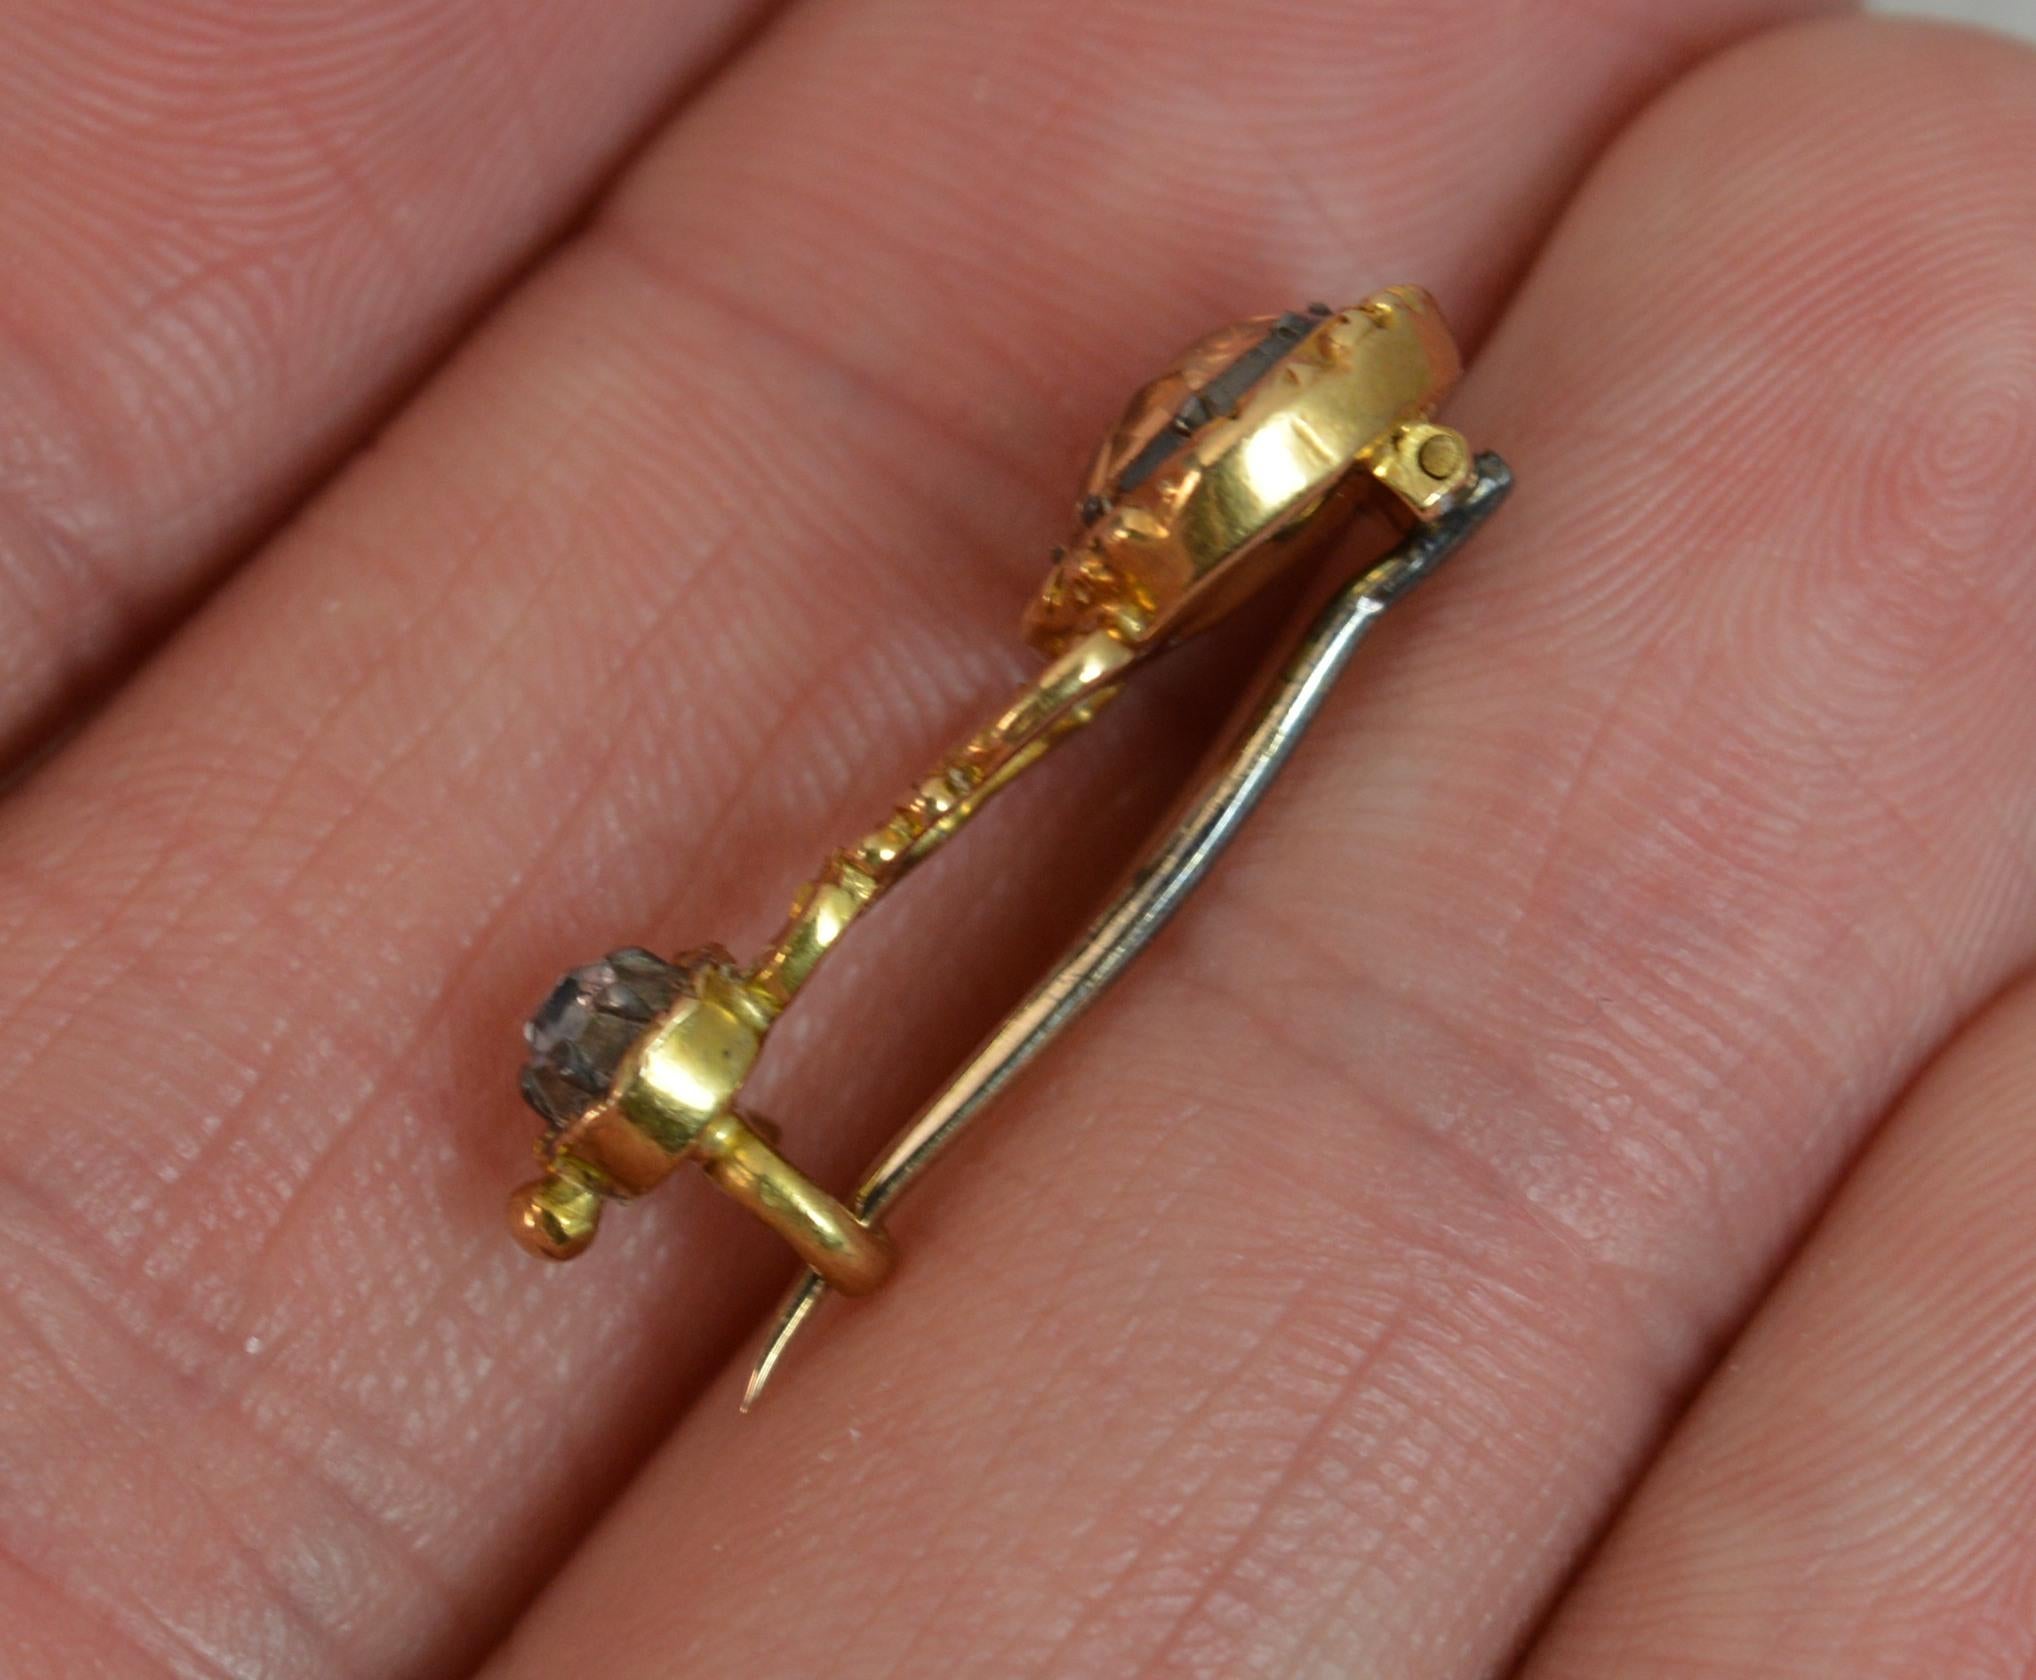 Halleys Comet Foiled Topaz Diamond 18 Carat Gold Brooch 2